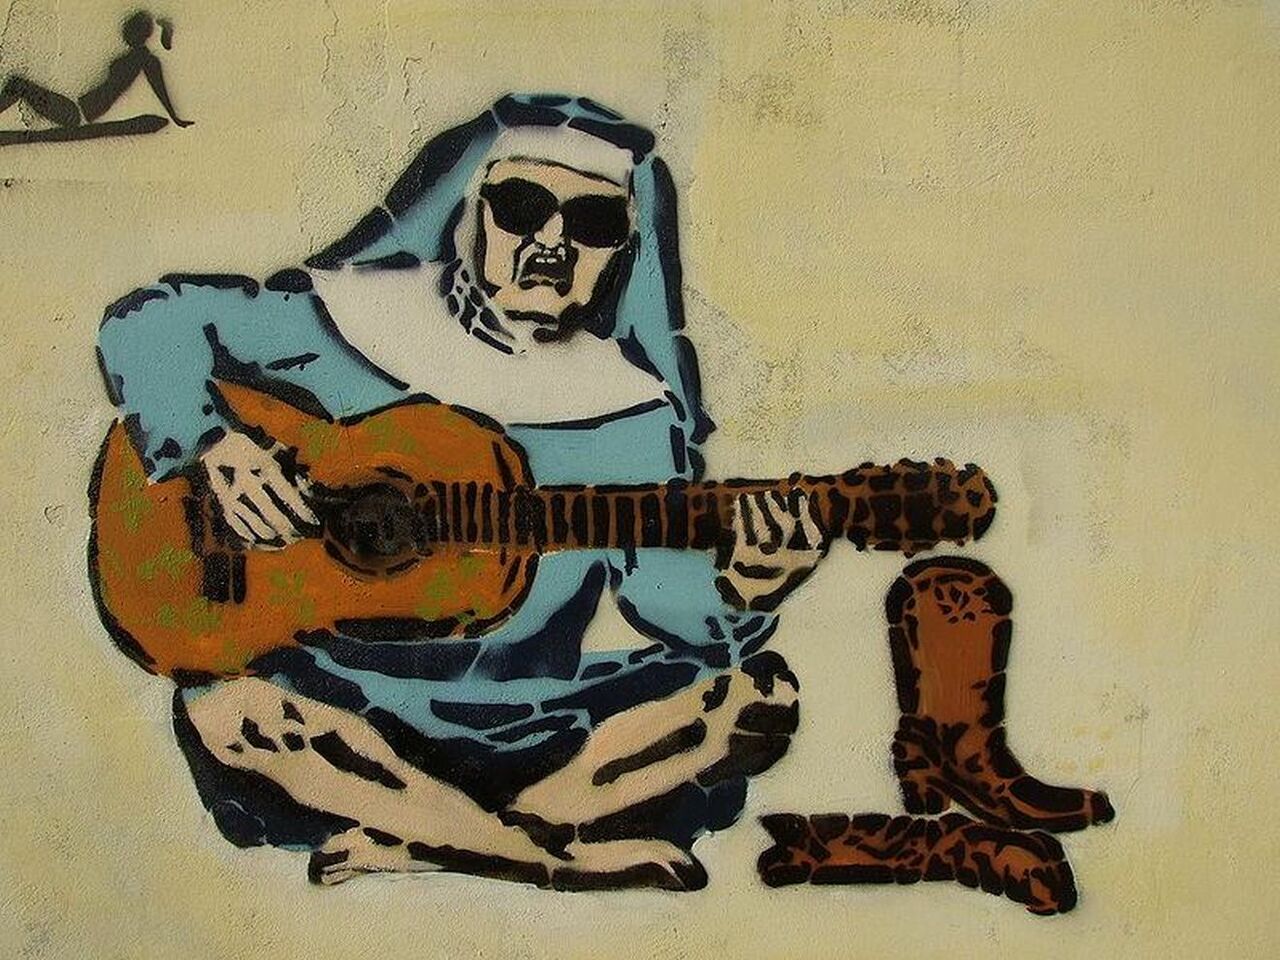 #StreetartSaturday This Singing Nun #Stencil #StreetArt is simple, fun and people will enjoy it. https://t.co/X6Ufe4hkjo